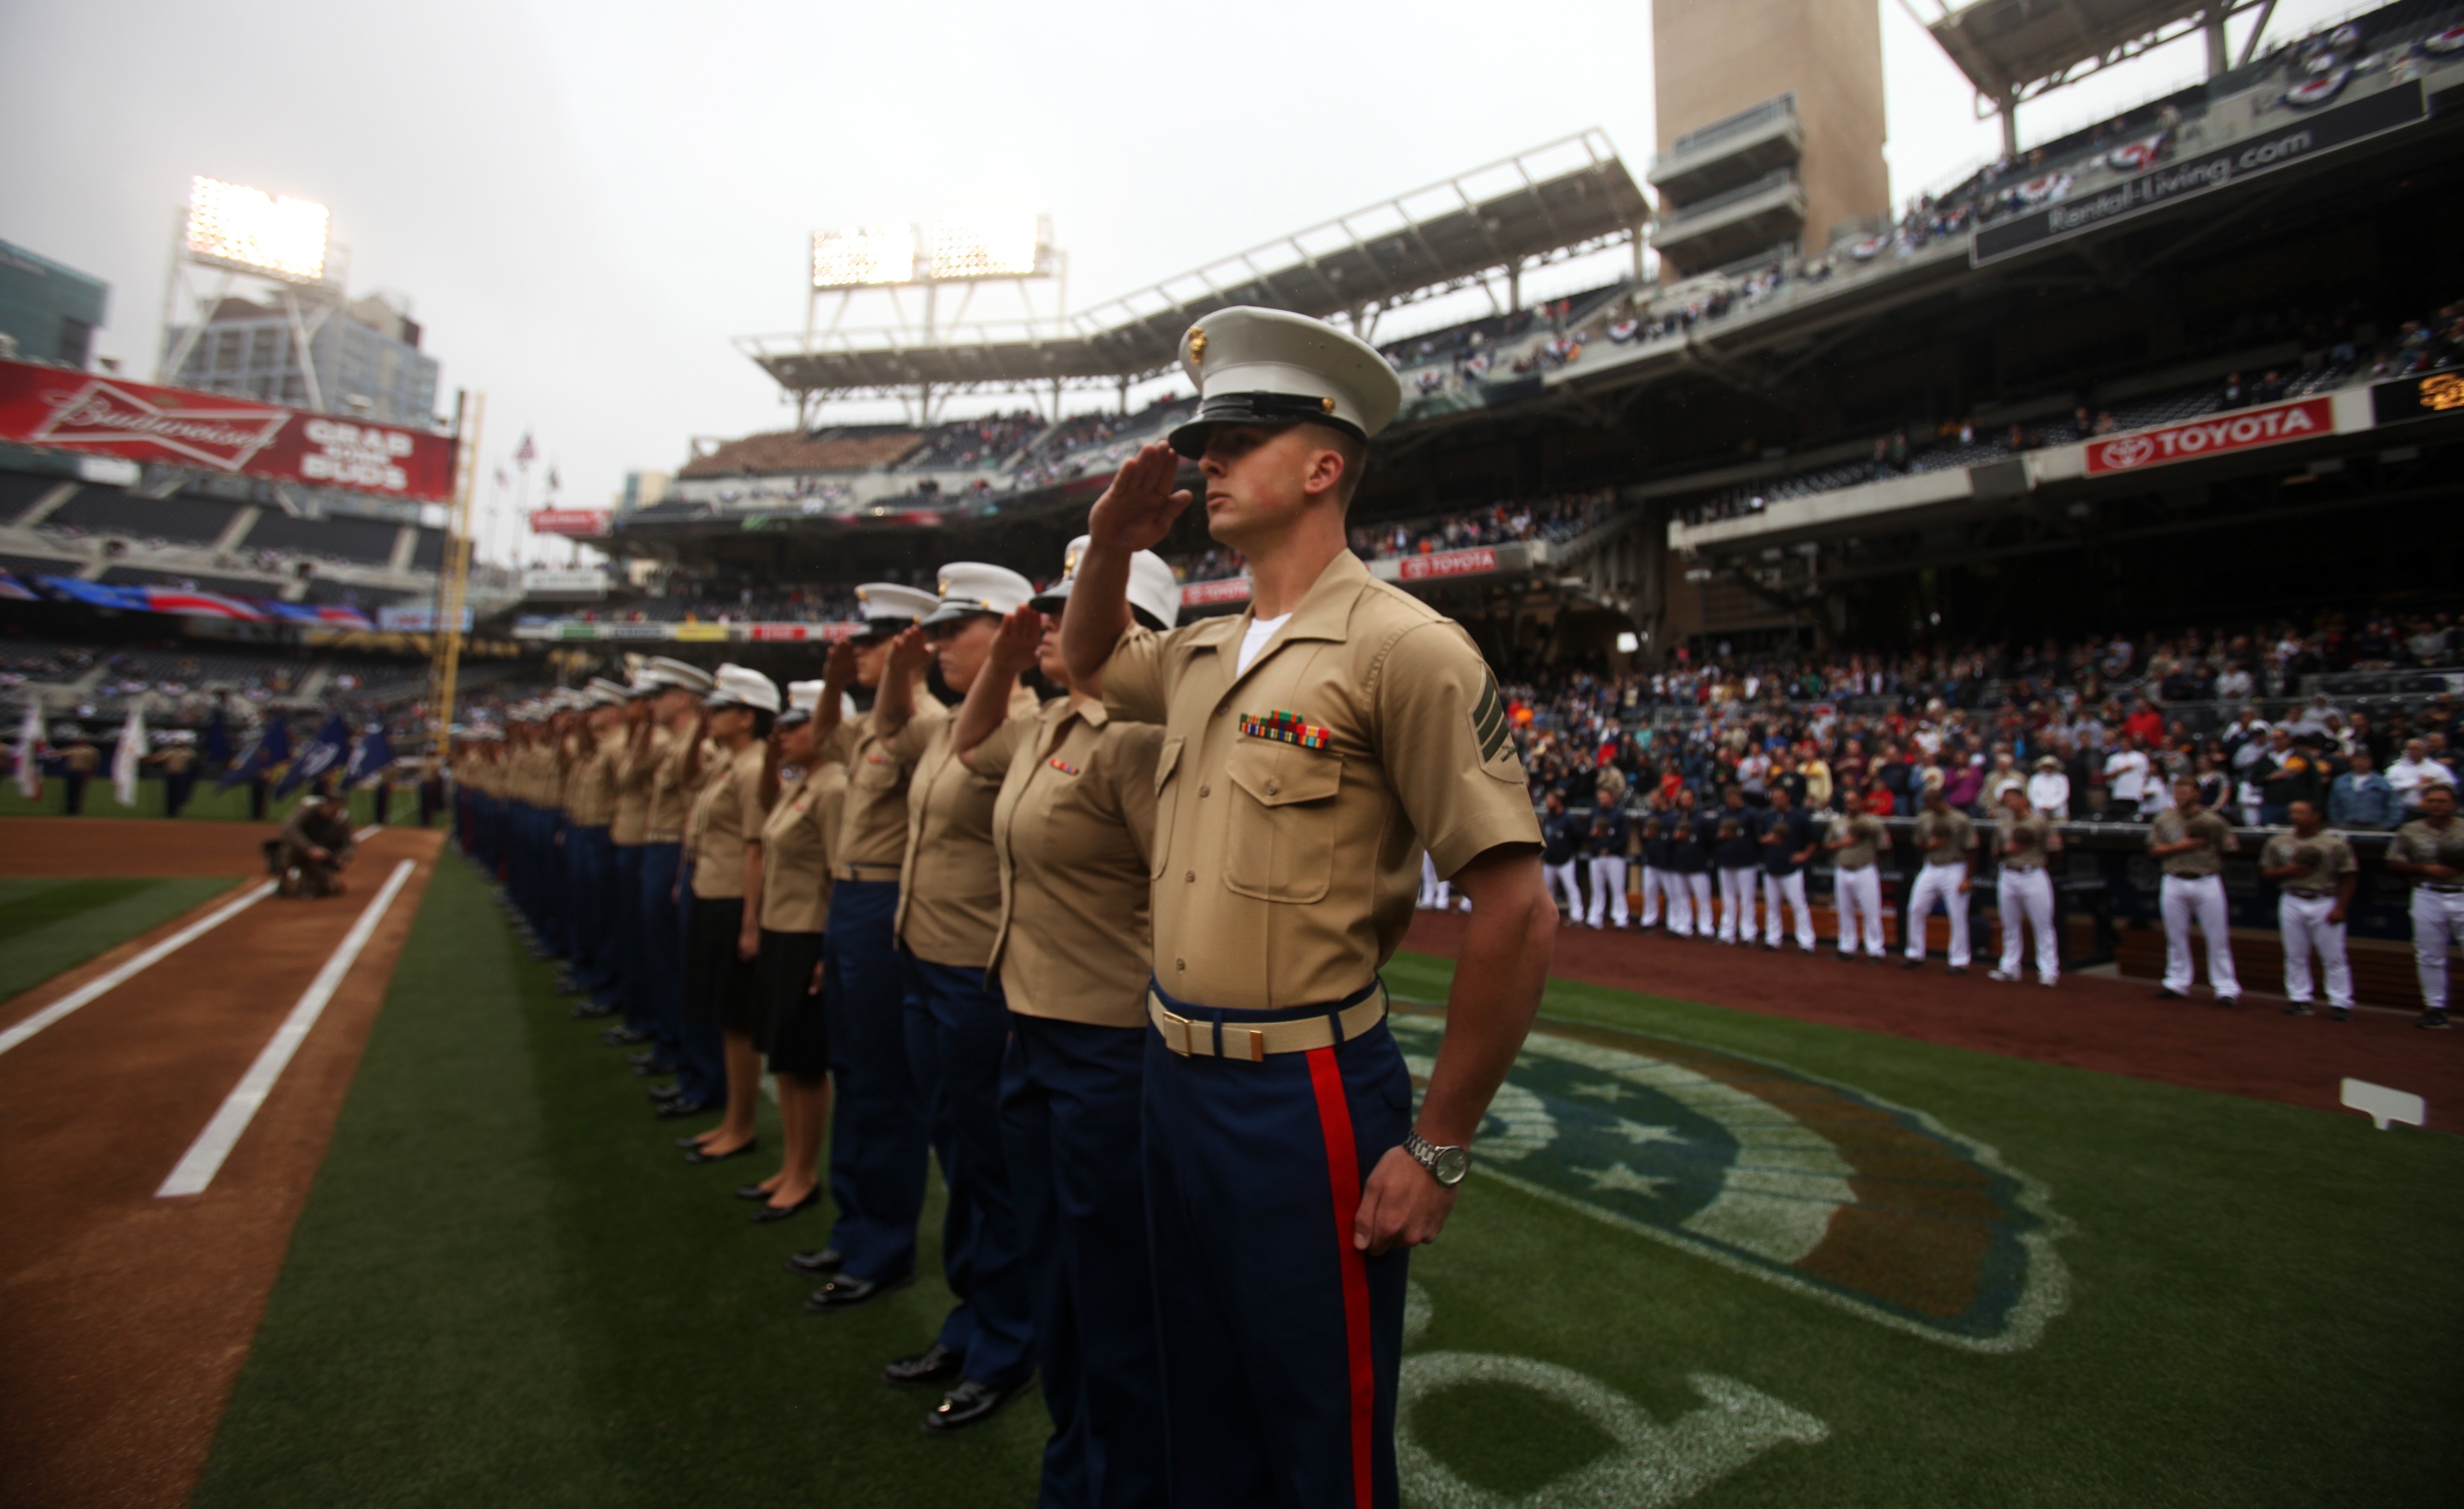 Baseball: Salute to Service Uniforms